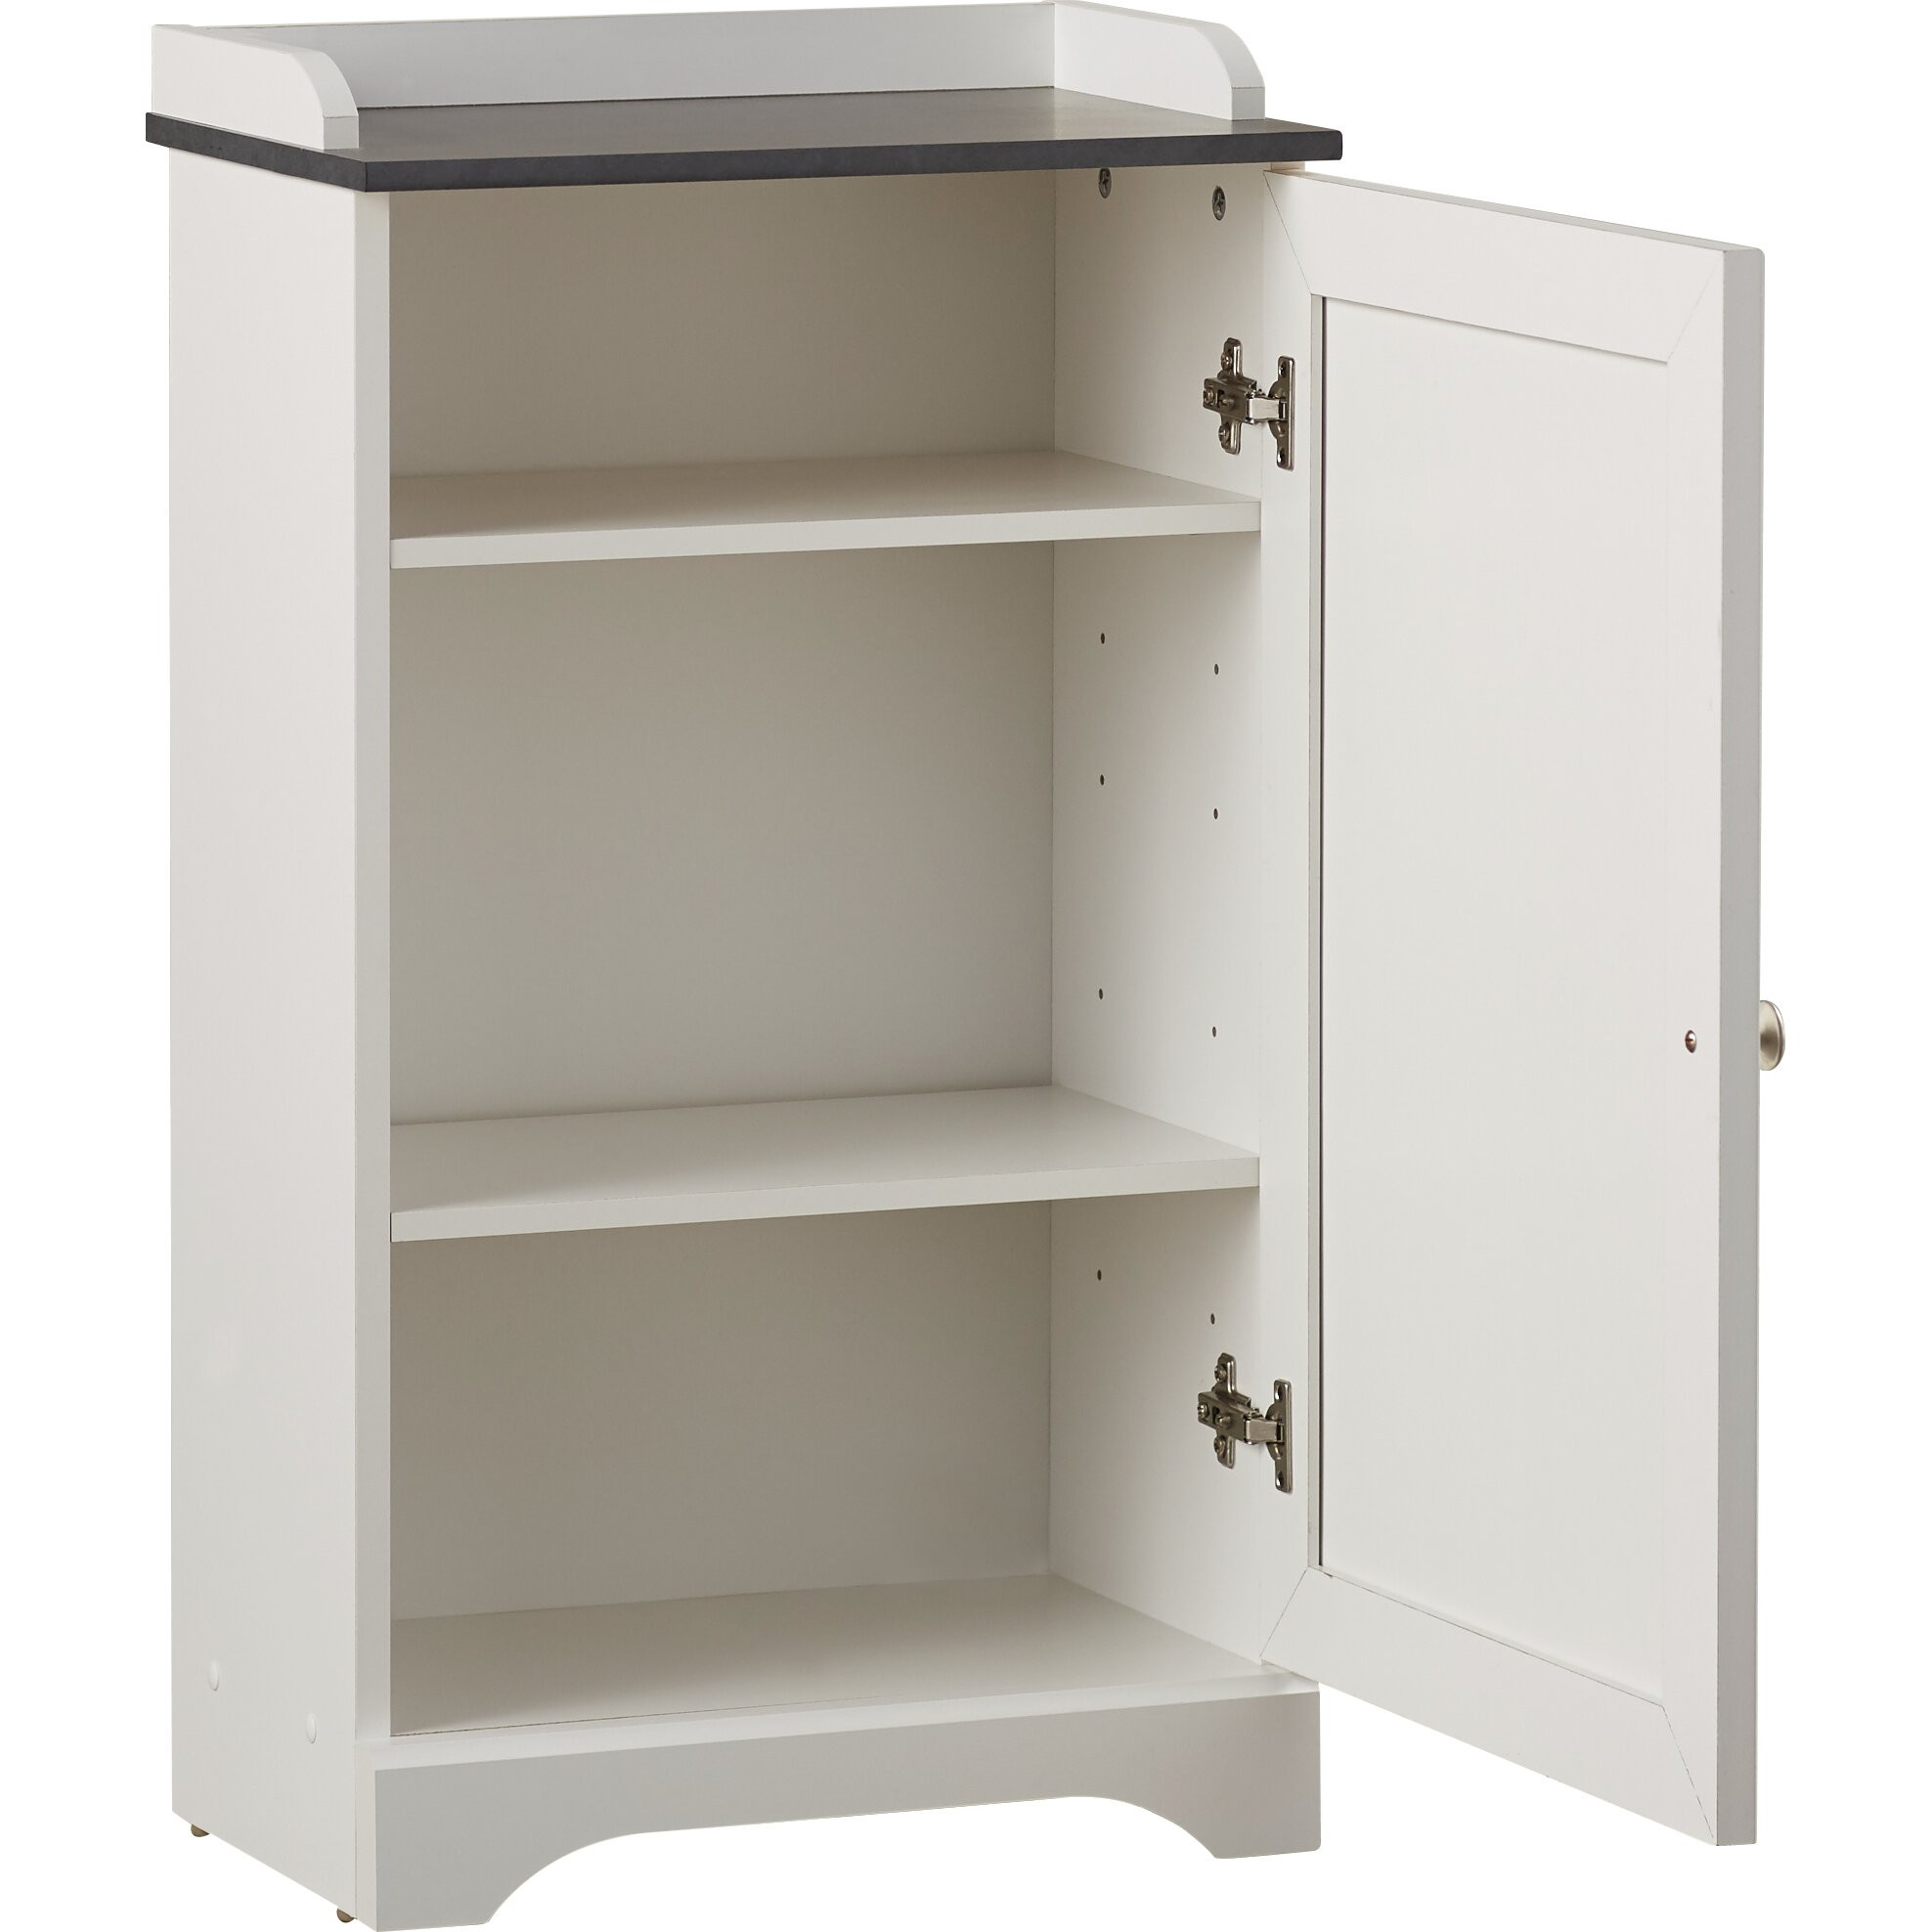 Freestanding Bathroom Cabinet
 Beachcrest Home Gulf Free Standing Cabinet & Reviews